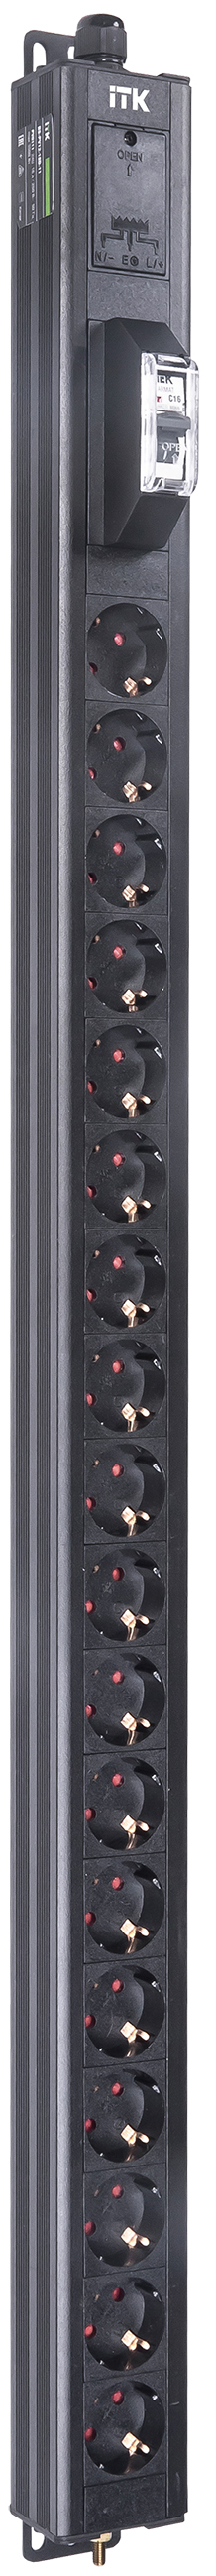 ITK BASE PDU вертикальный PV0111 24U 1 фаза 16А 18 розеток SCHUKO (немецкий стандарт) кабель 2,6м вилка SCHUKO (немецкий стандарт)